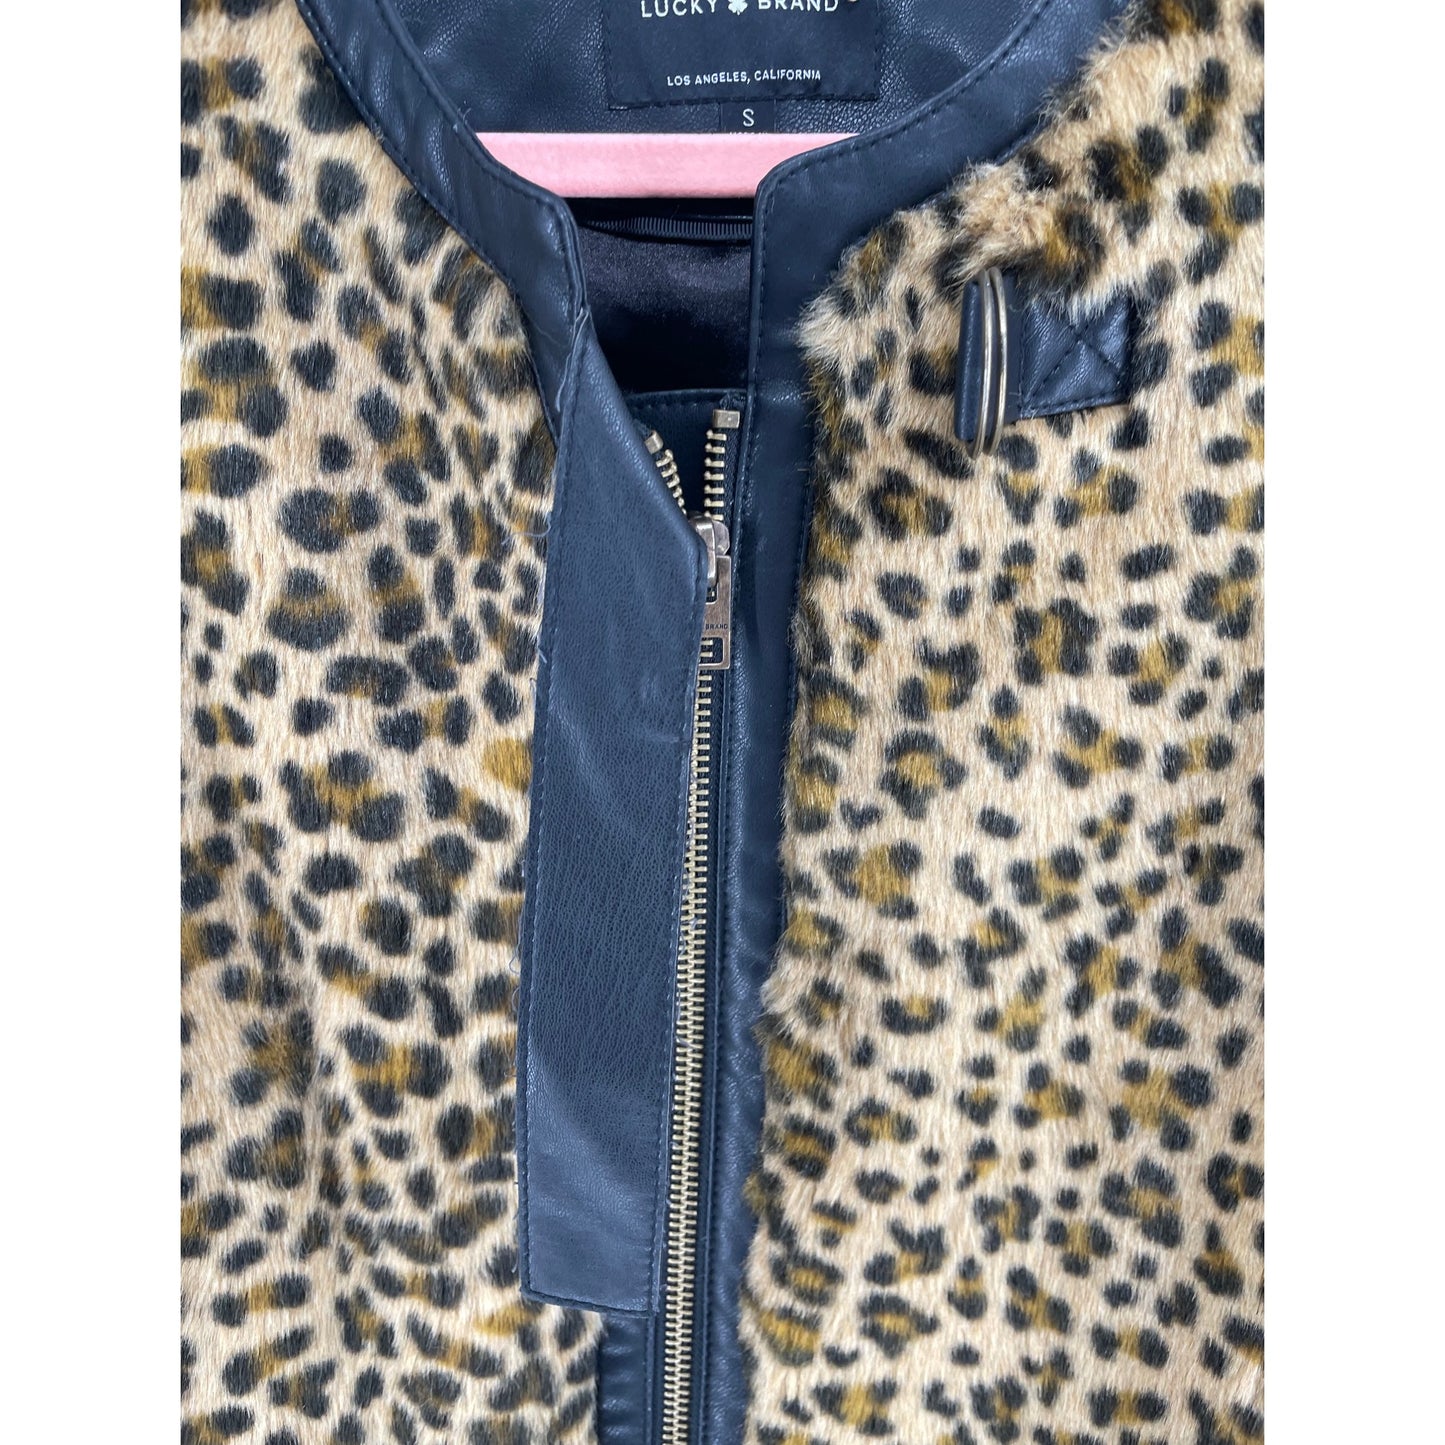 Lucky Brand Women's Small Faux Leopard Print Coat W/ Black Faux Leather Trim